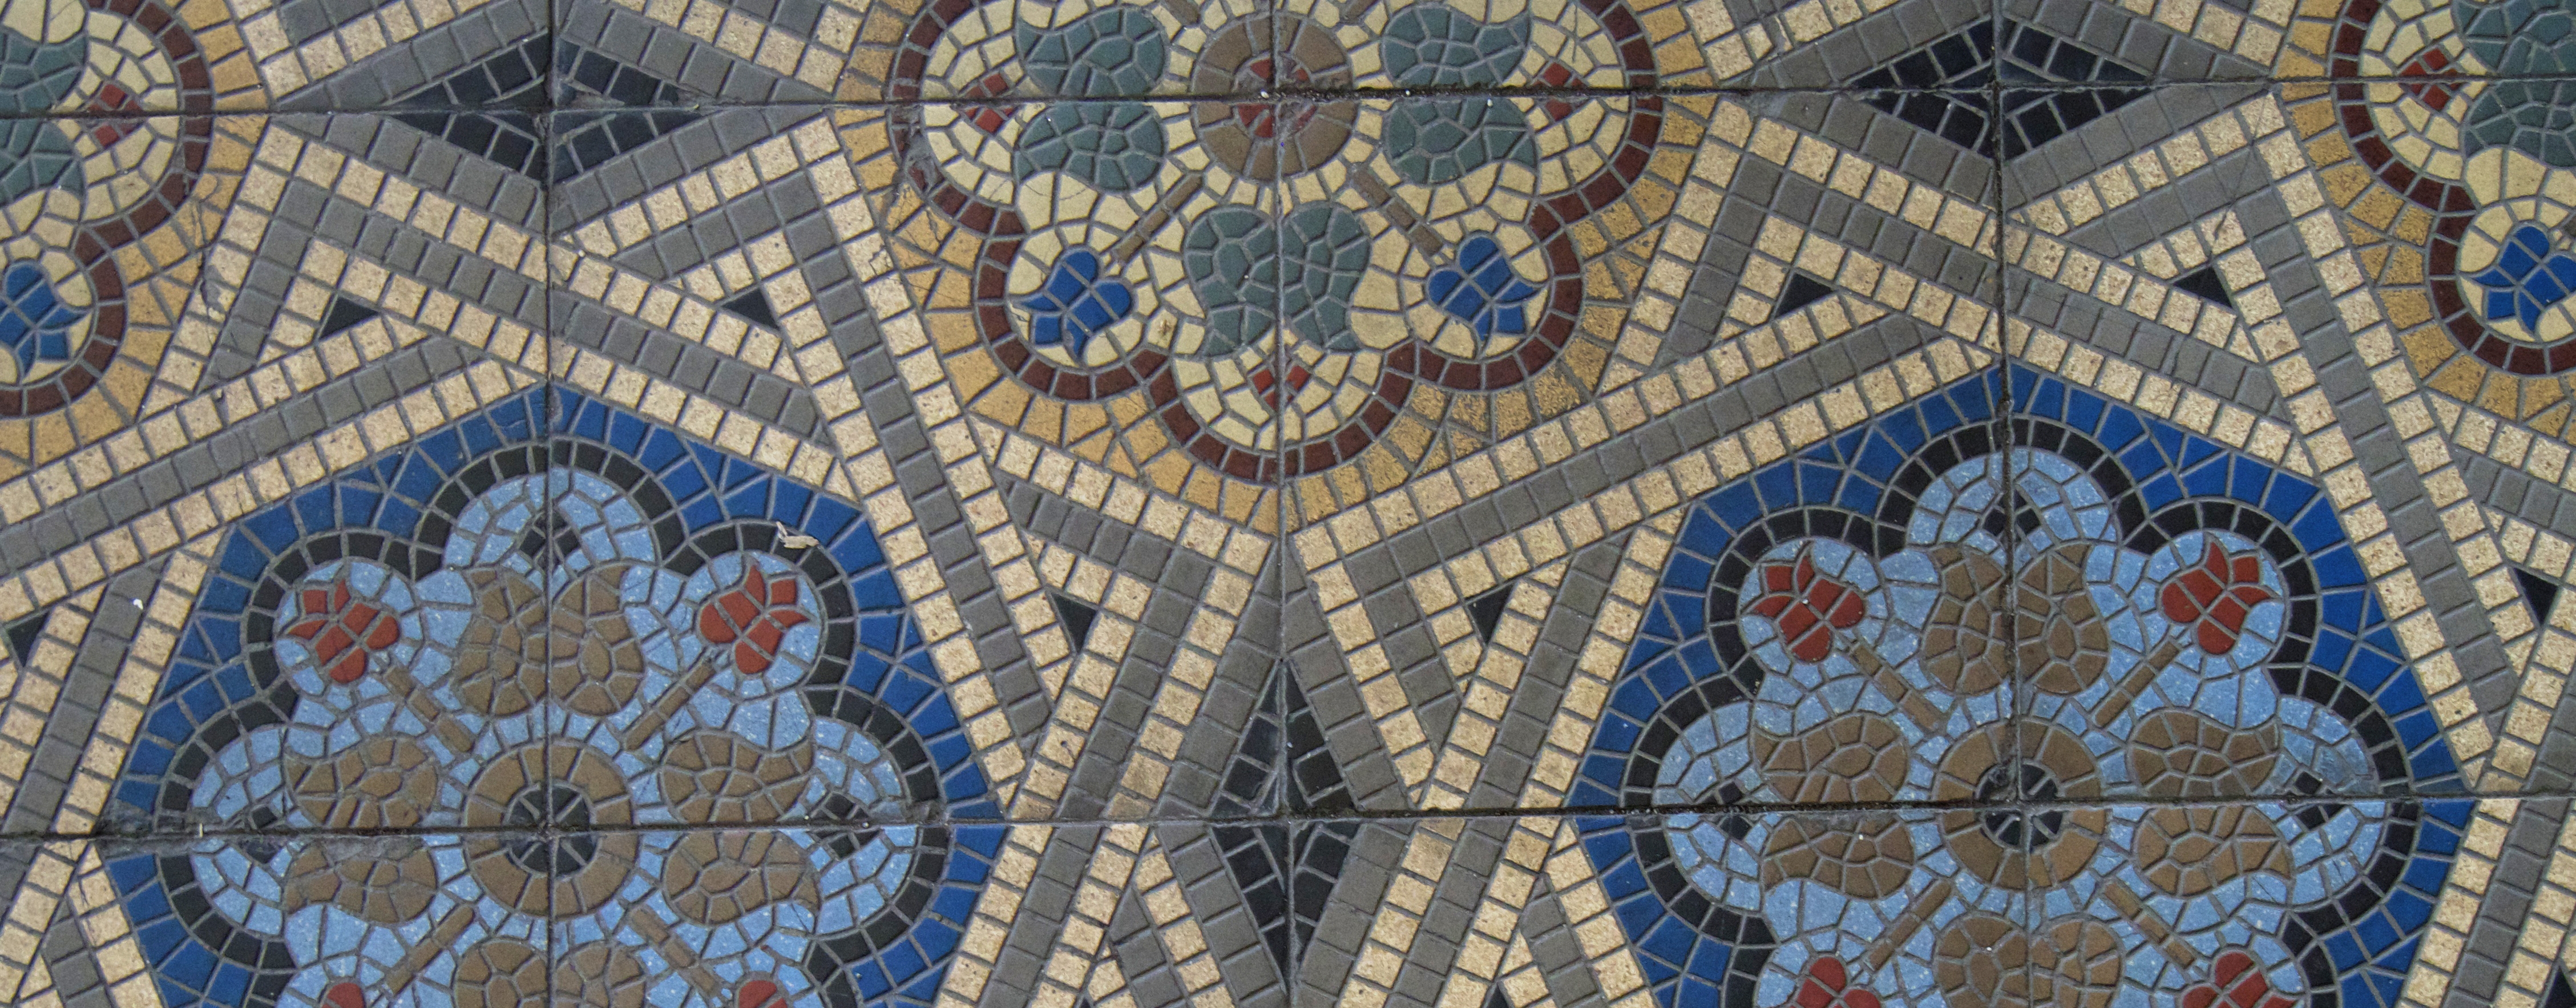 NELC Banner 14 Hagia Sofia Floor Tile